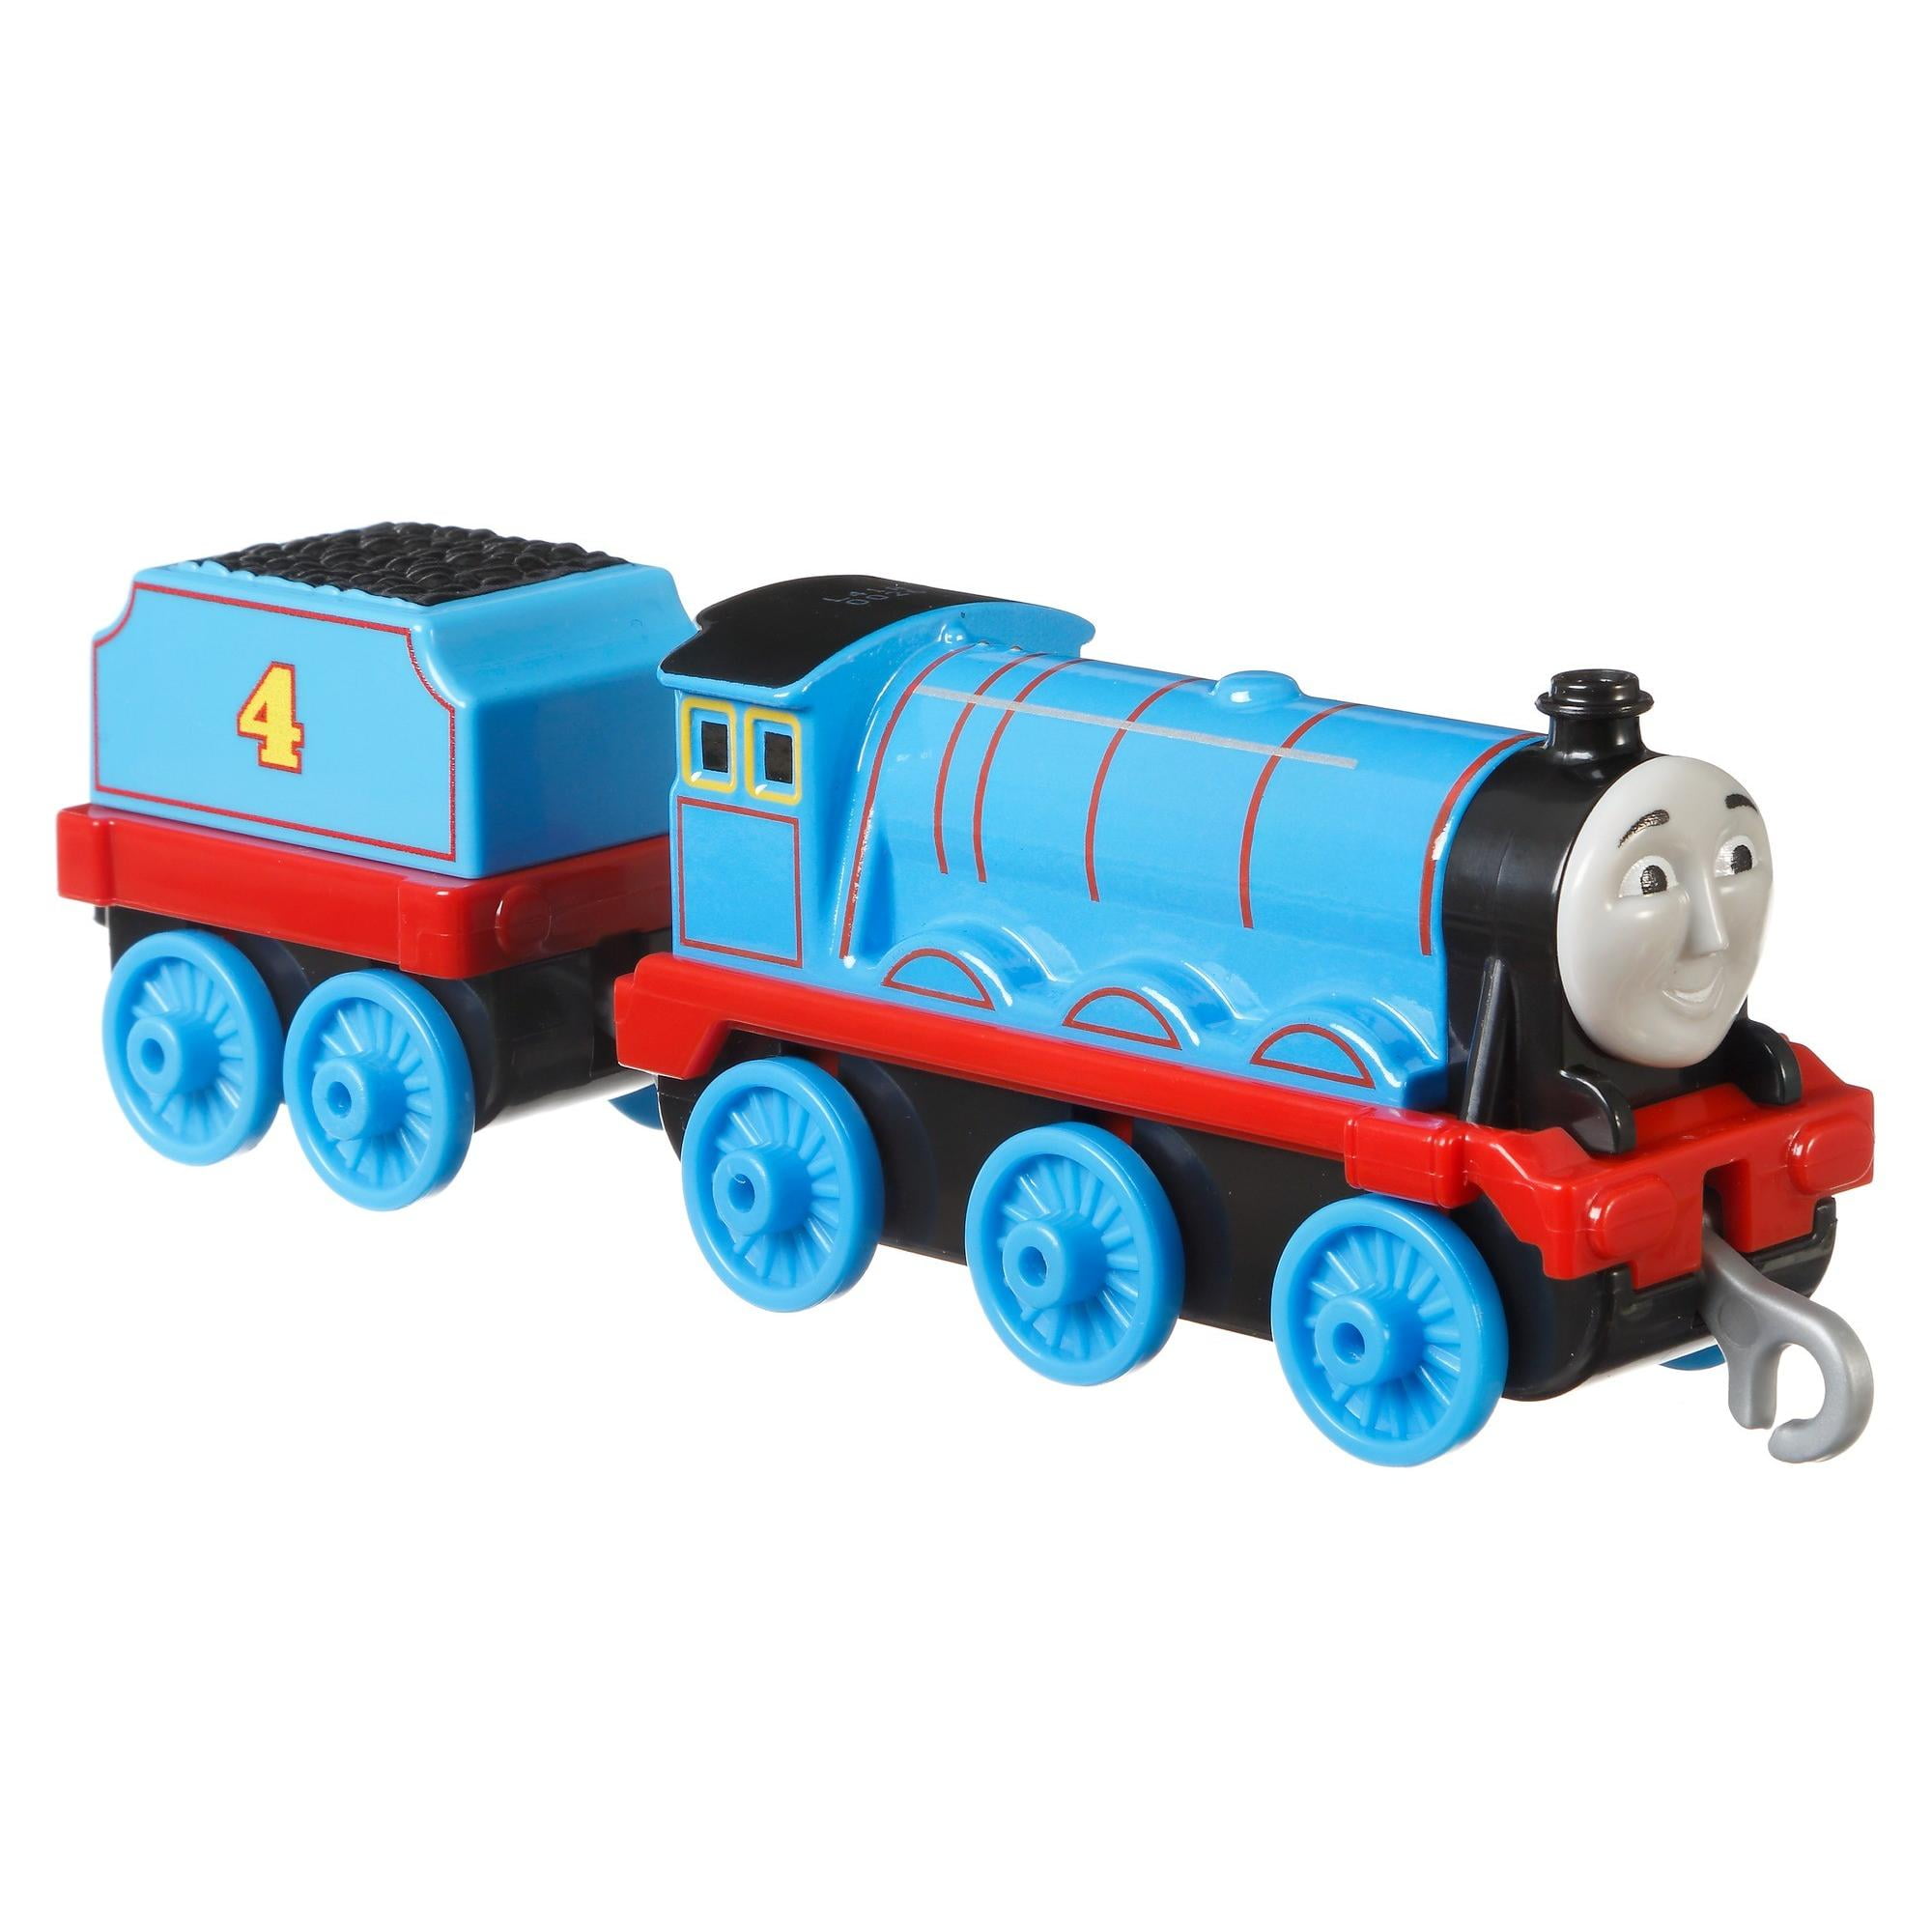 Details about  / Thomas /& friends take n play metal train engine thomas the tank engine show original title